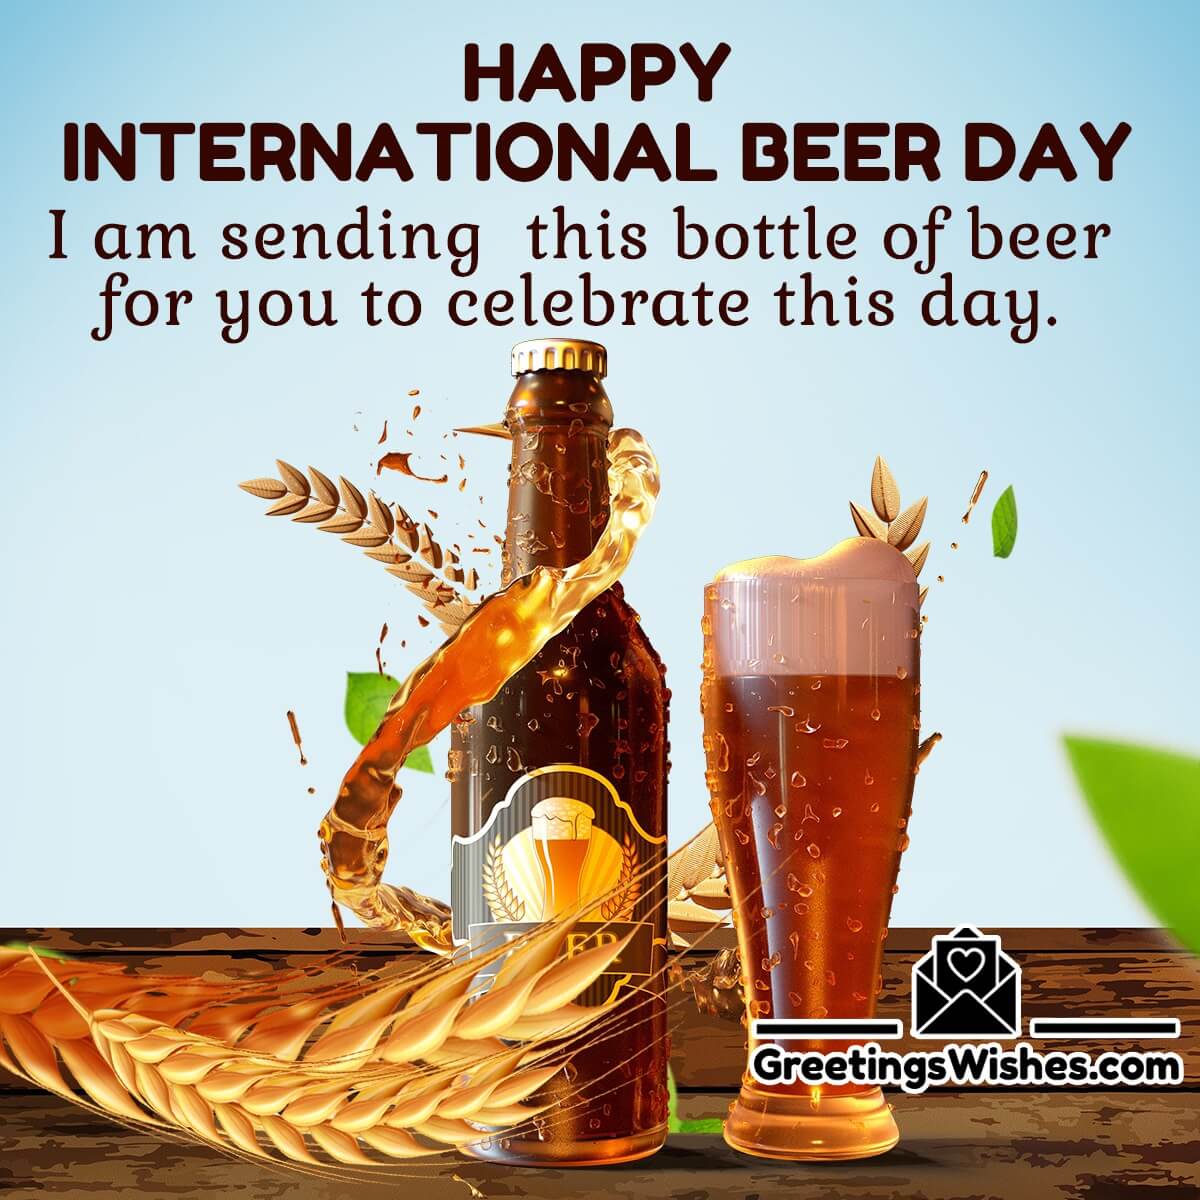 Happy International Beer Day Image